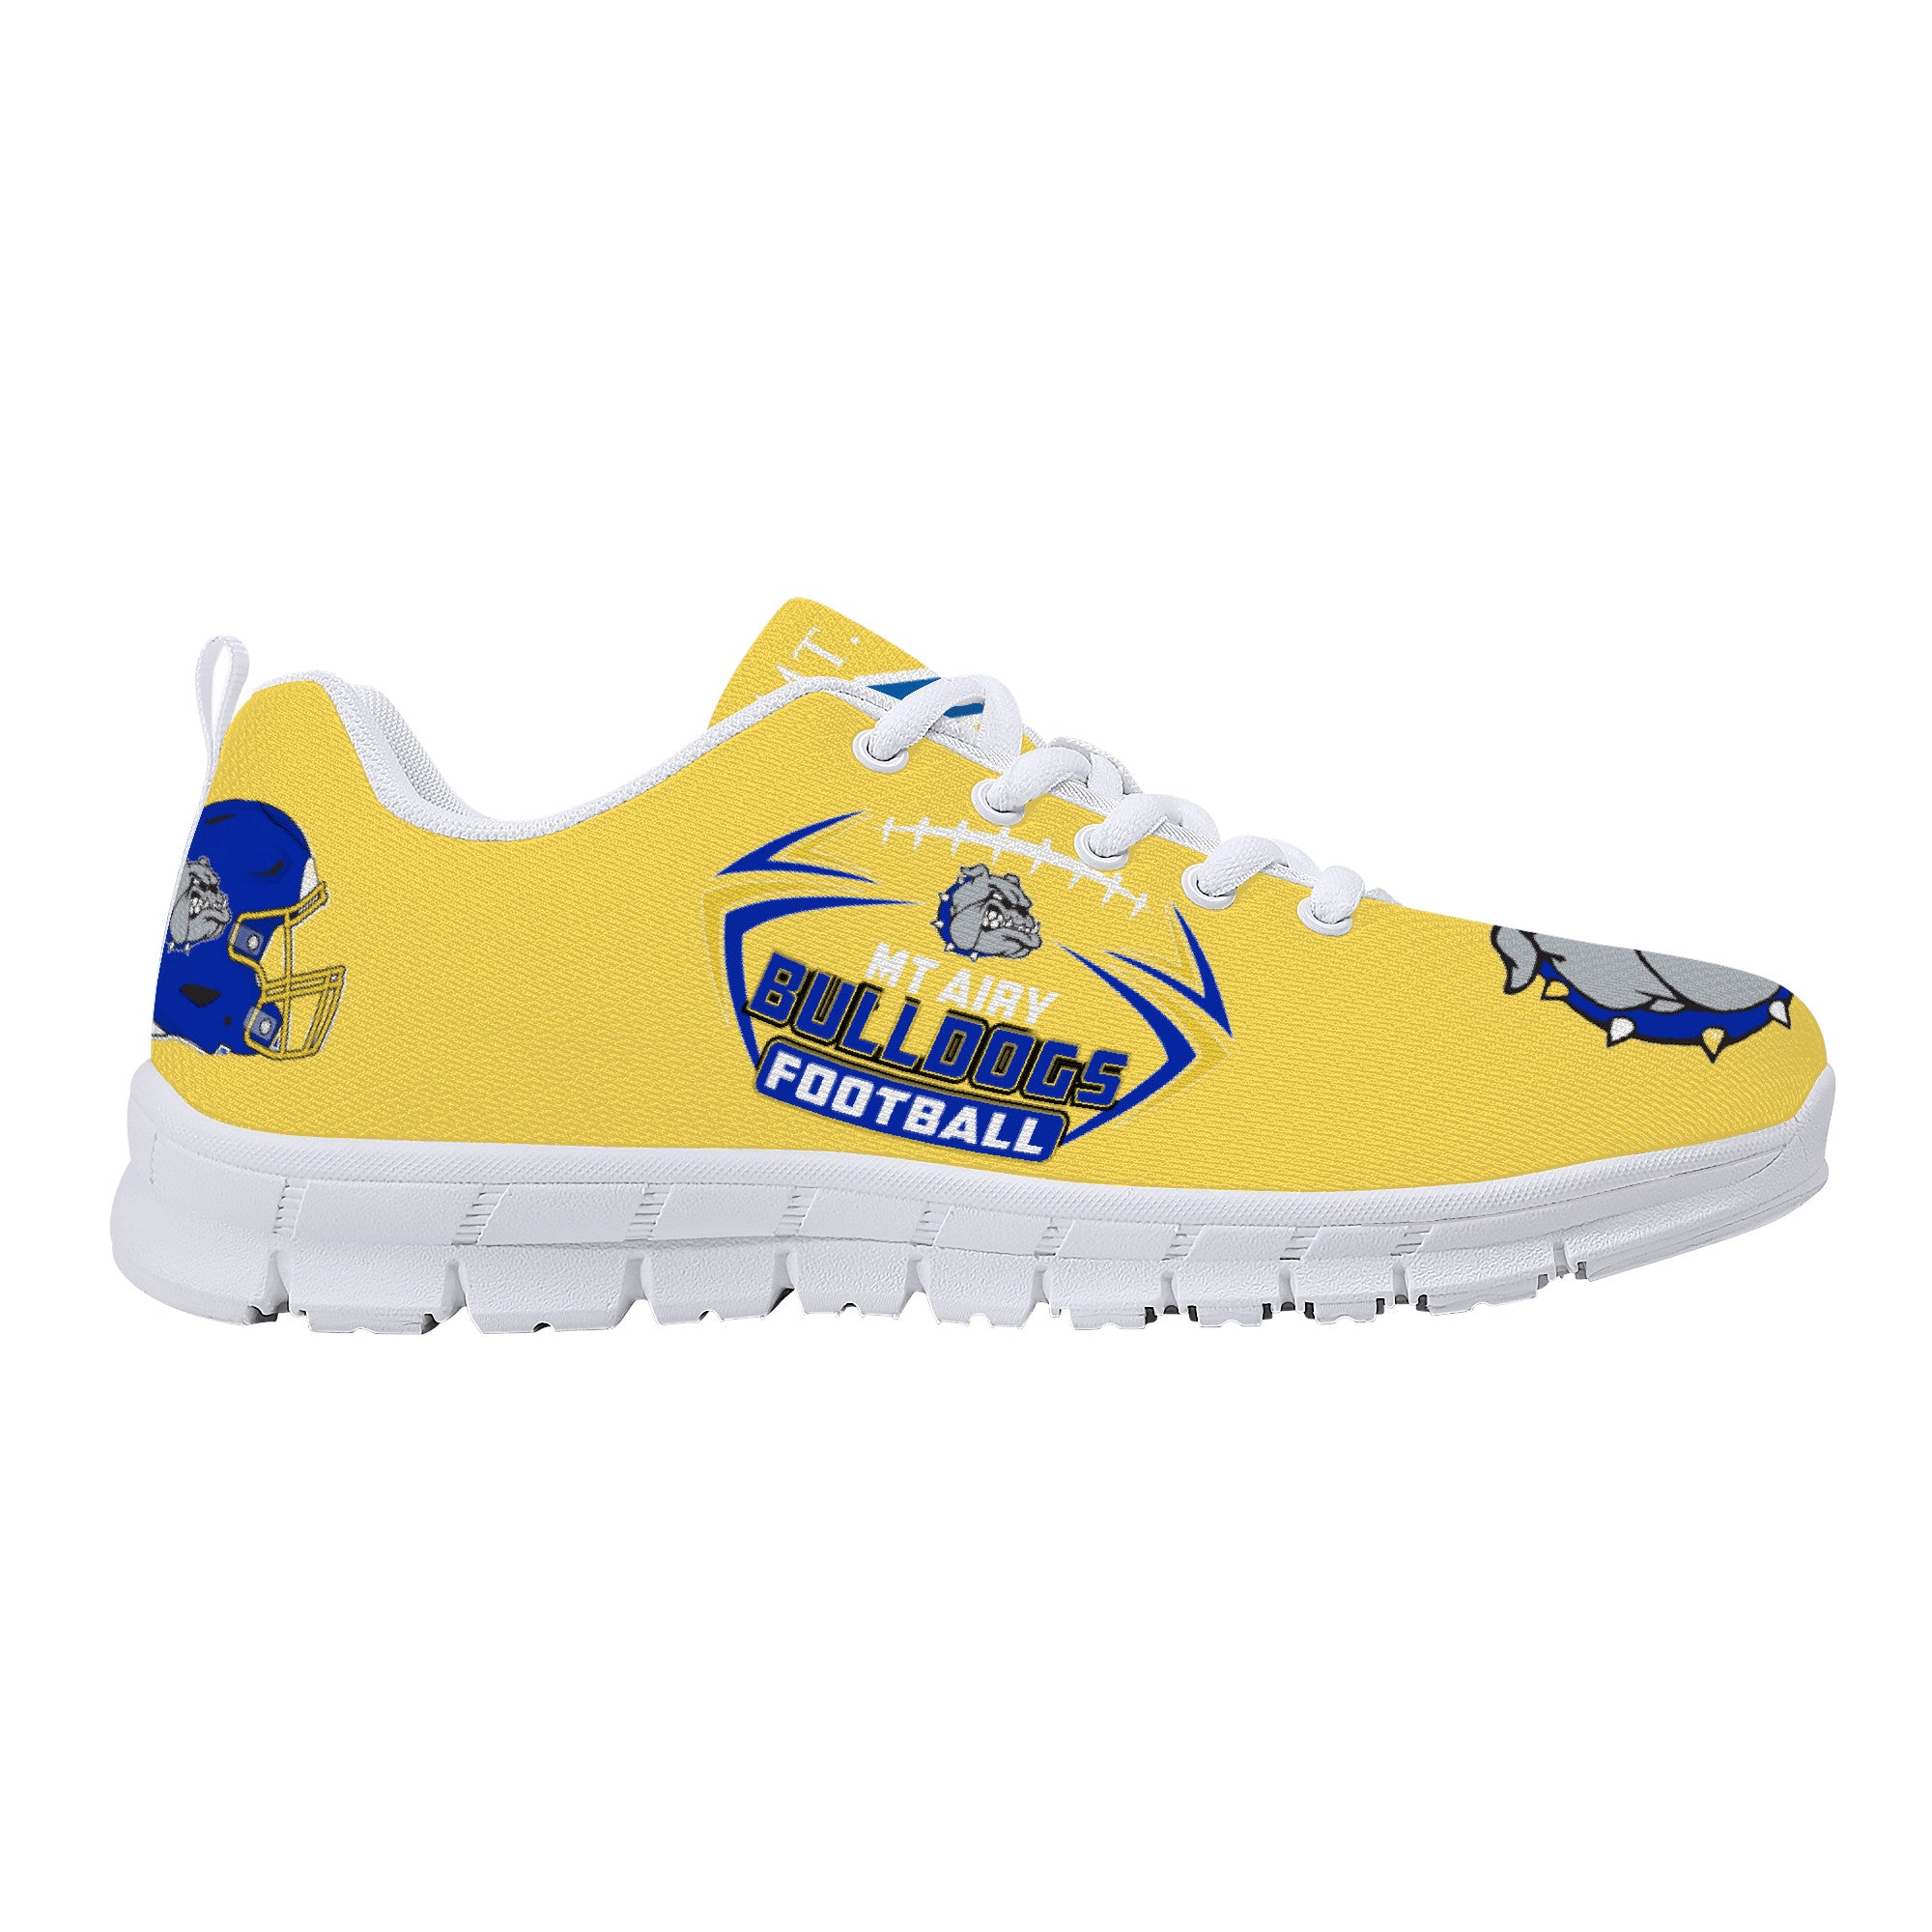 Bulldogs Football shoes by Philip S. | Low Tops Customized | Shoe Zero - Shoe Zero